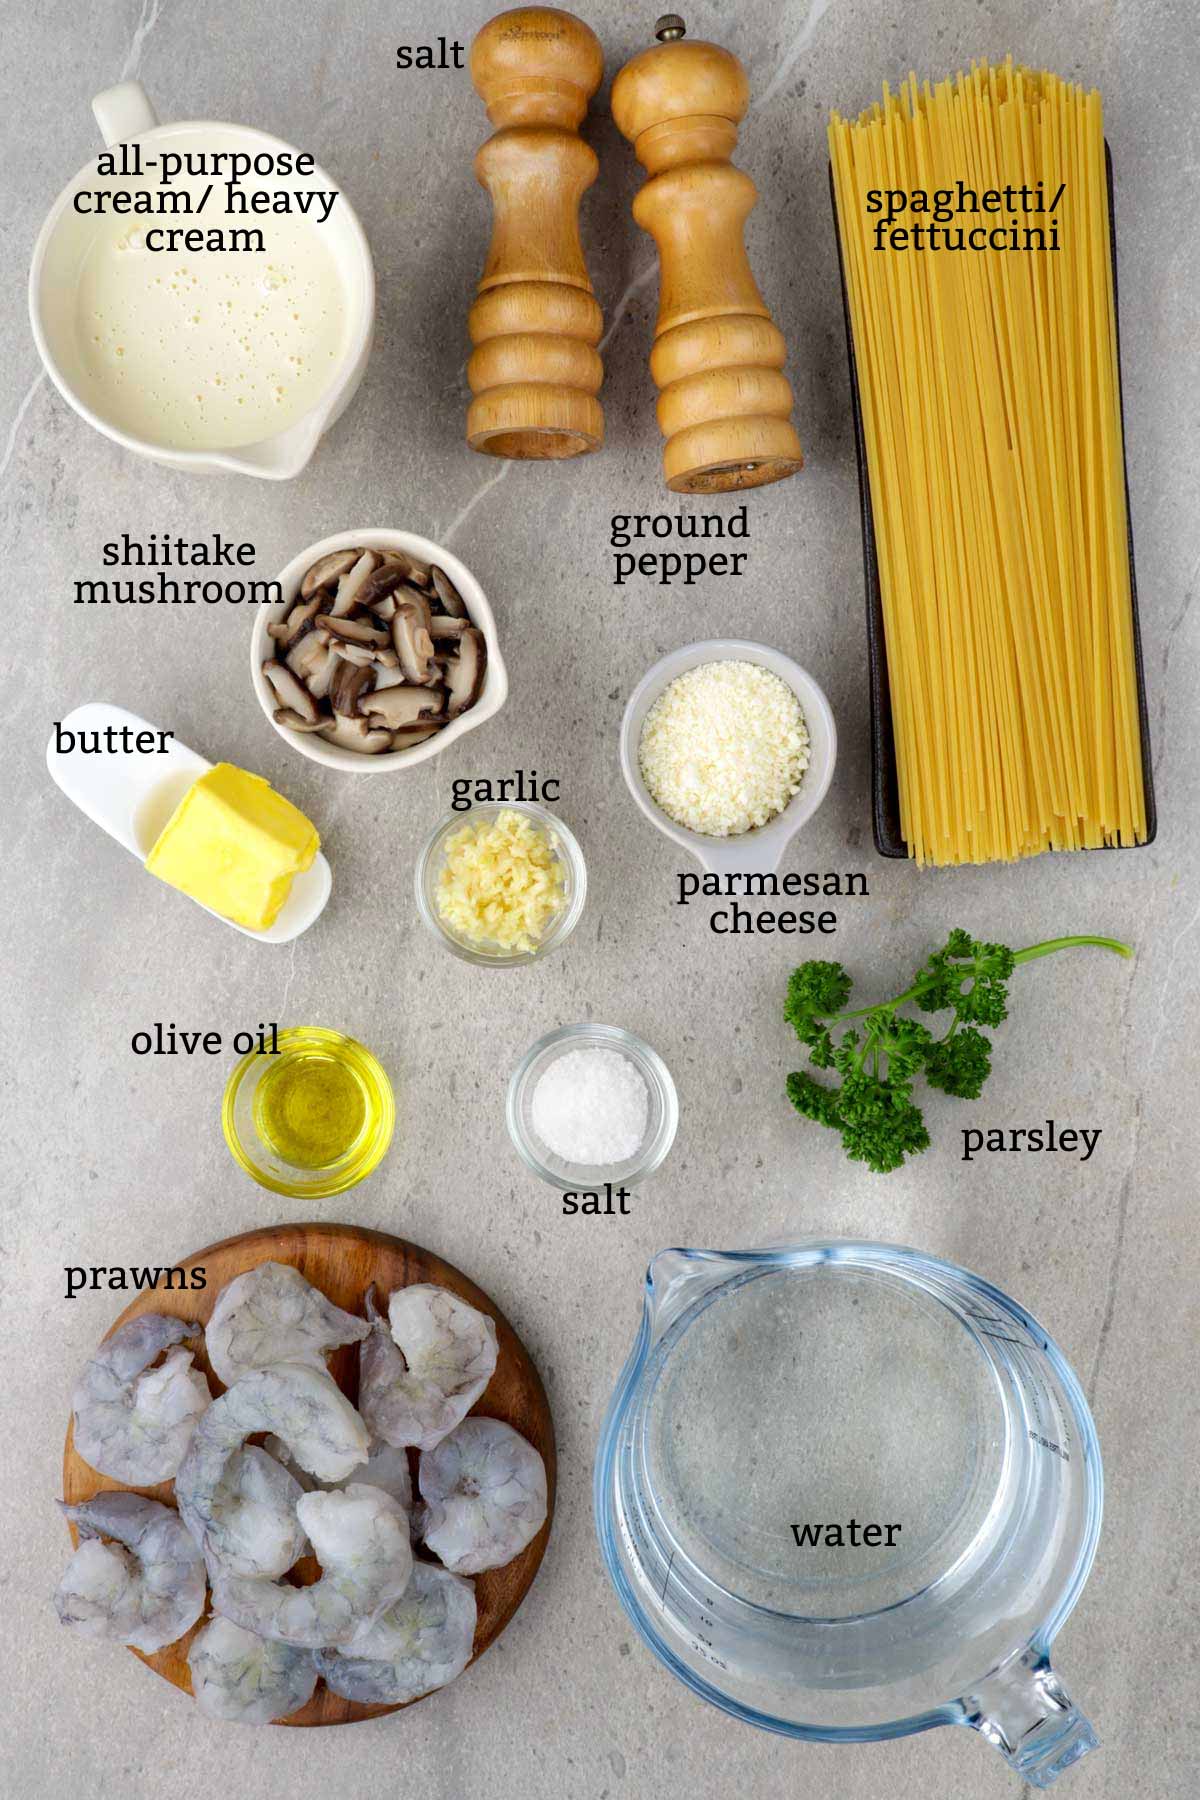 Ingredients for Creamy Pesto Pasta.